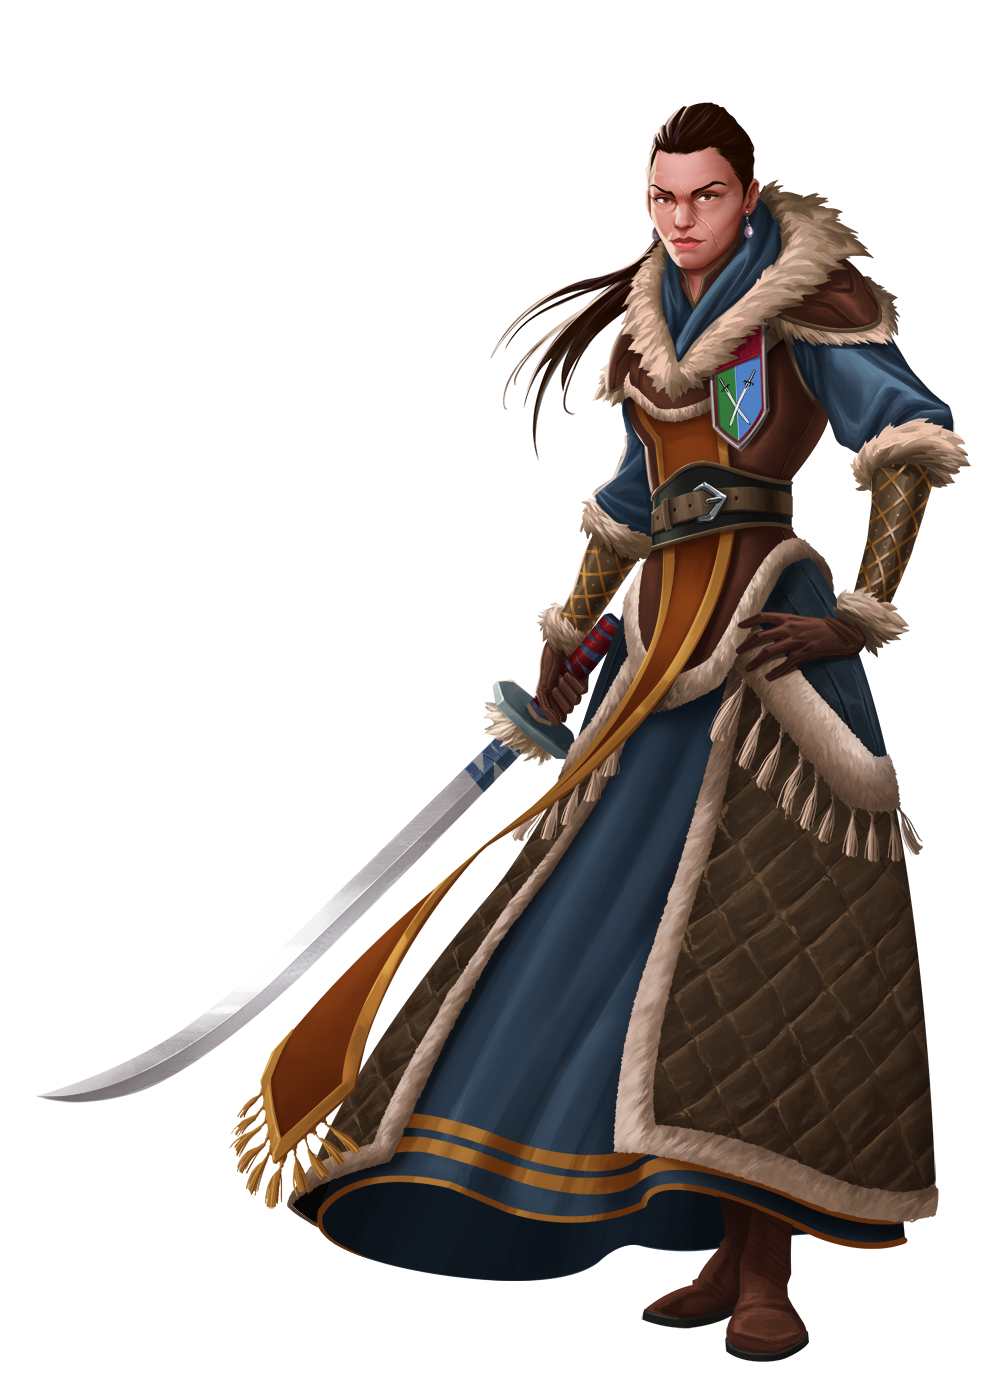 A Taldan woman wields an Aldori dueling sword as well as a grim expression